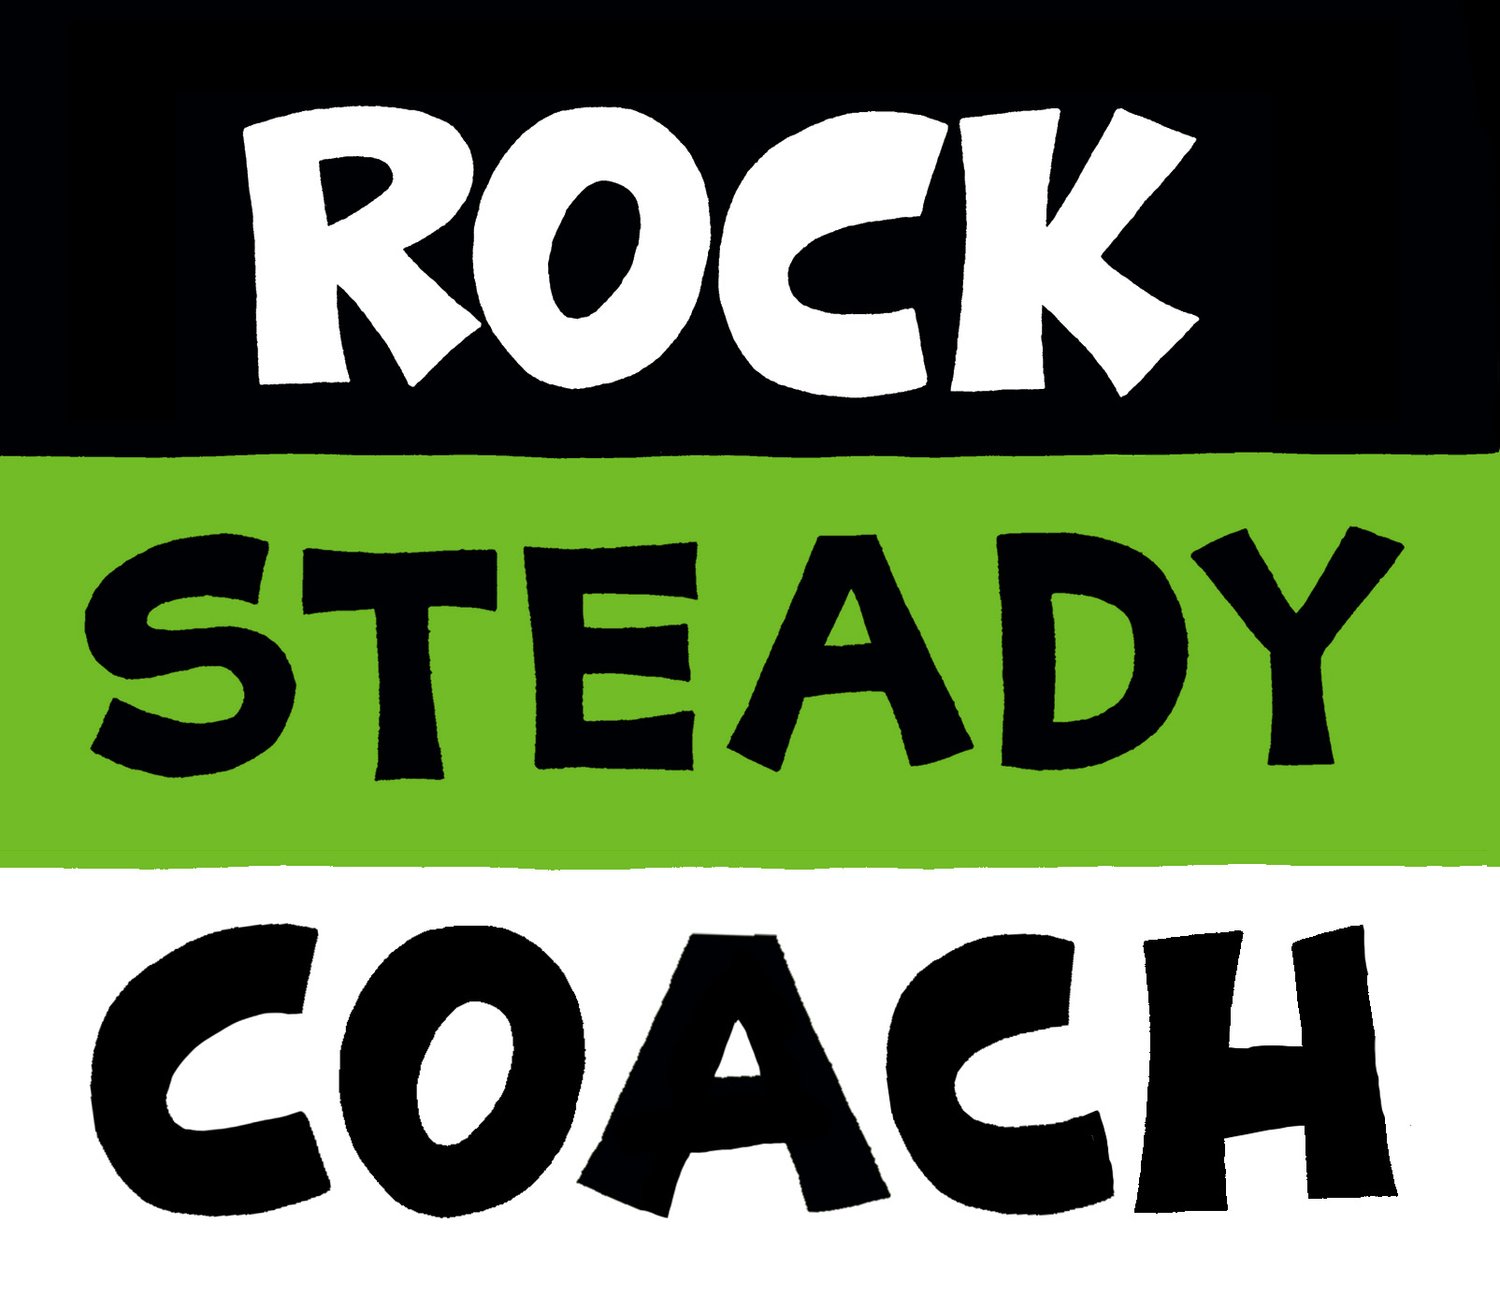 Rock Steady Coach